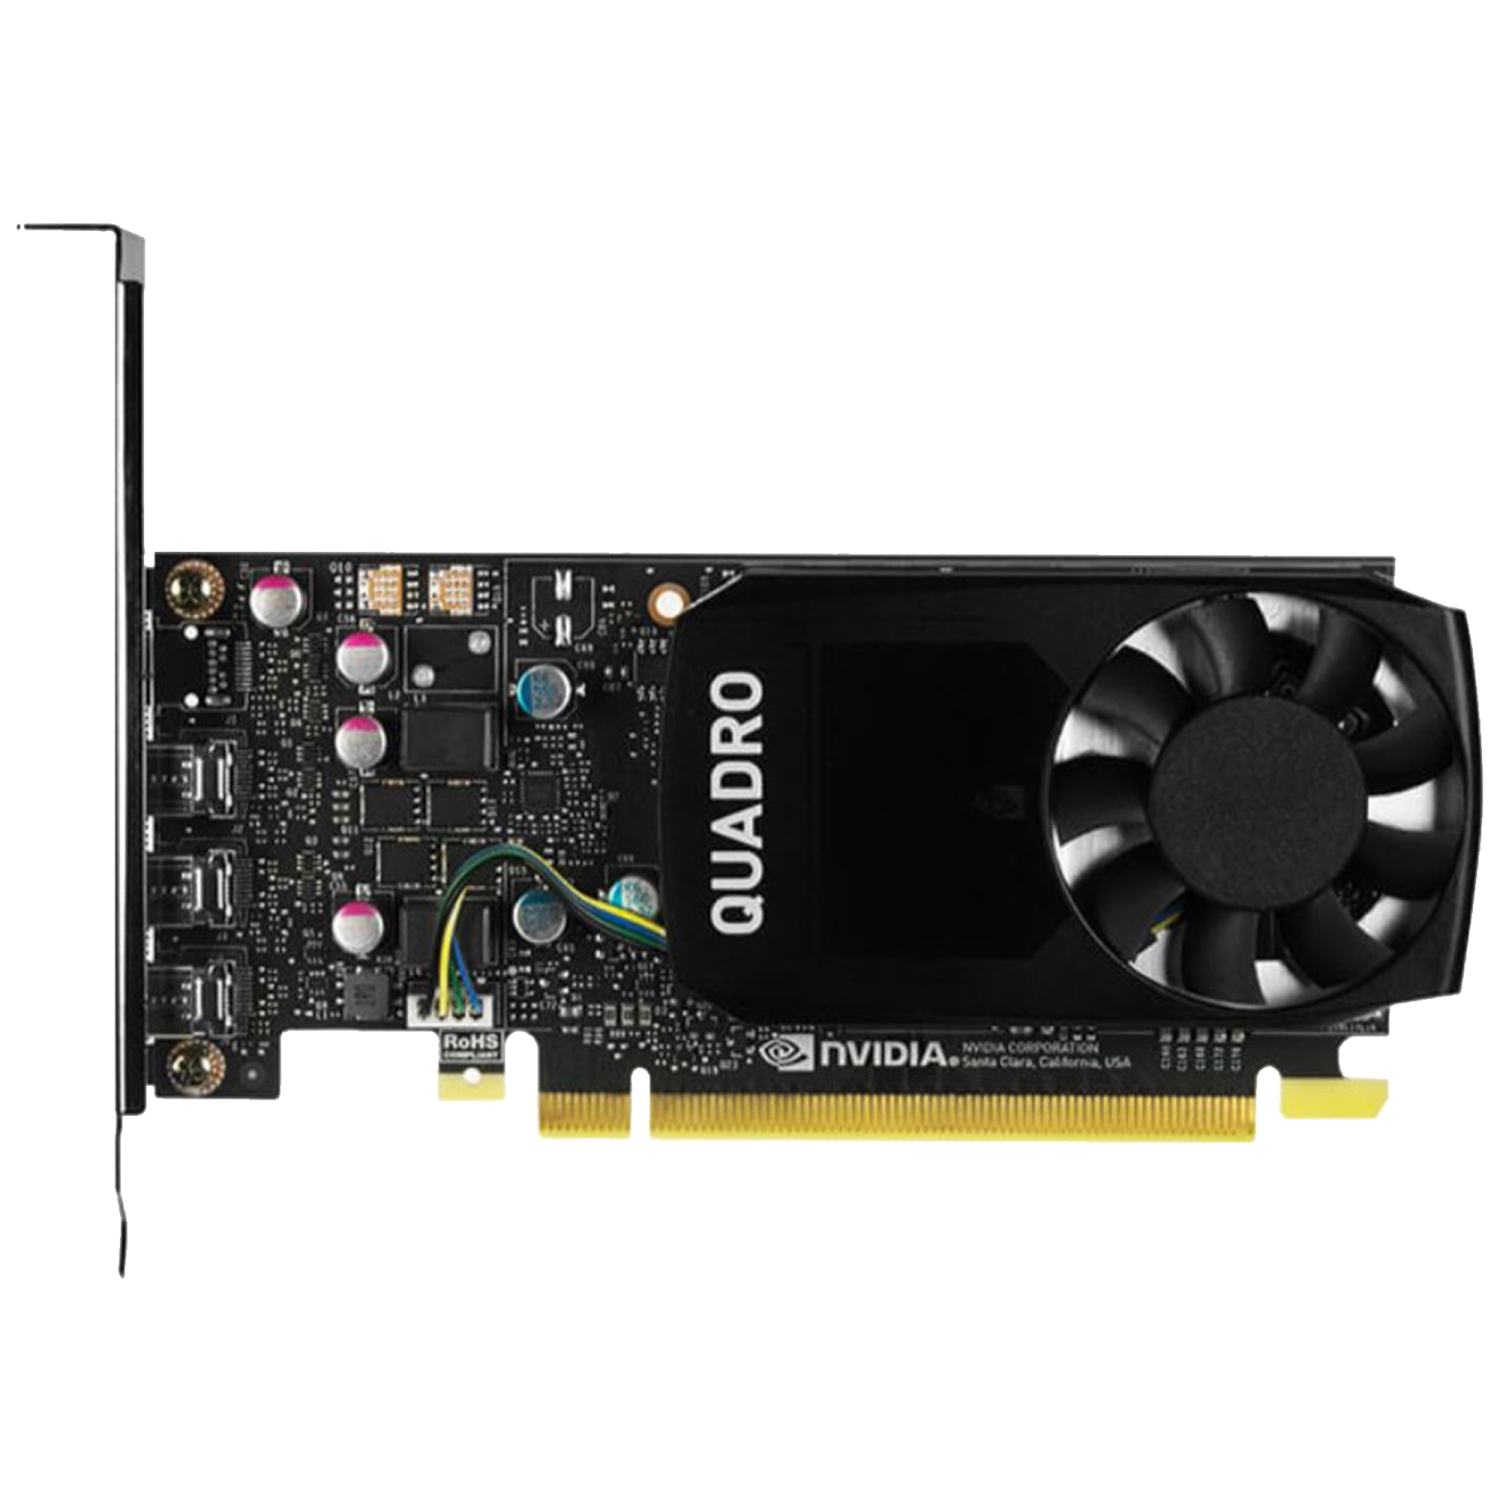 Refurbished (Good) - NVIDIA Quadro P400 Professional Video Card up to 34GB/s (2GB GDDR5 64-bit/ PCI Express 3.0 x16/ 3x Mini Display ports) High Profile Graphics Card